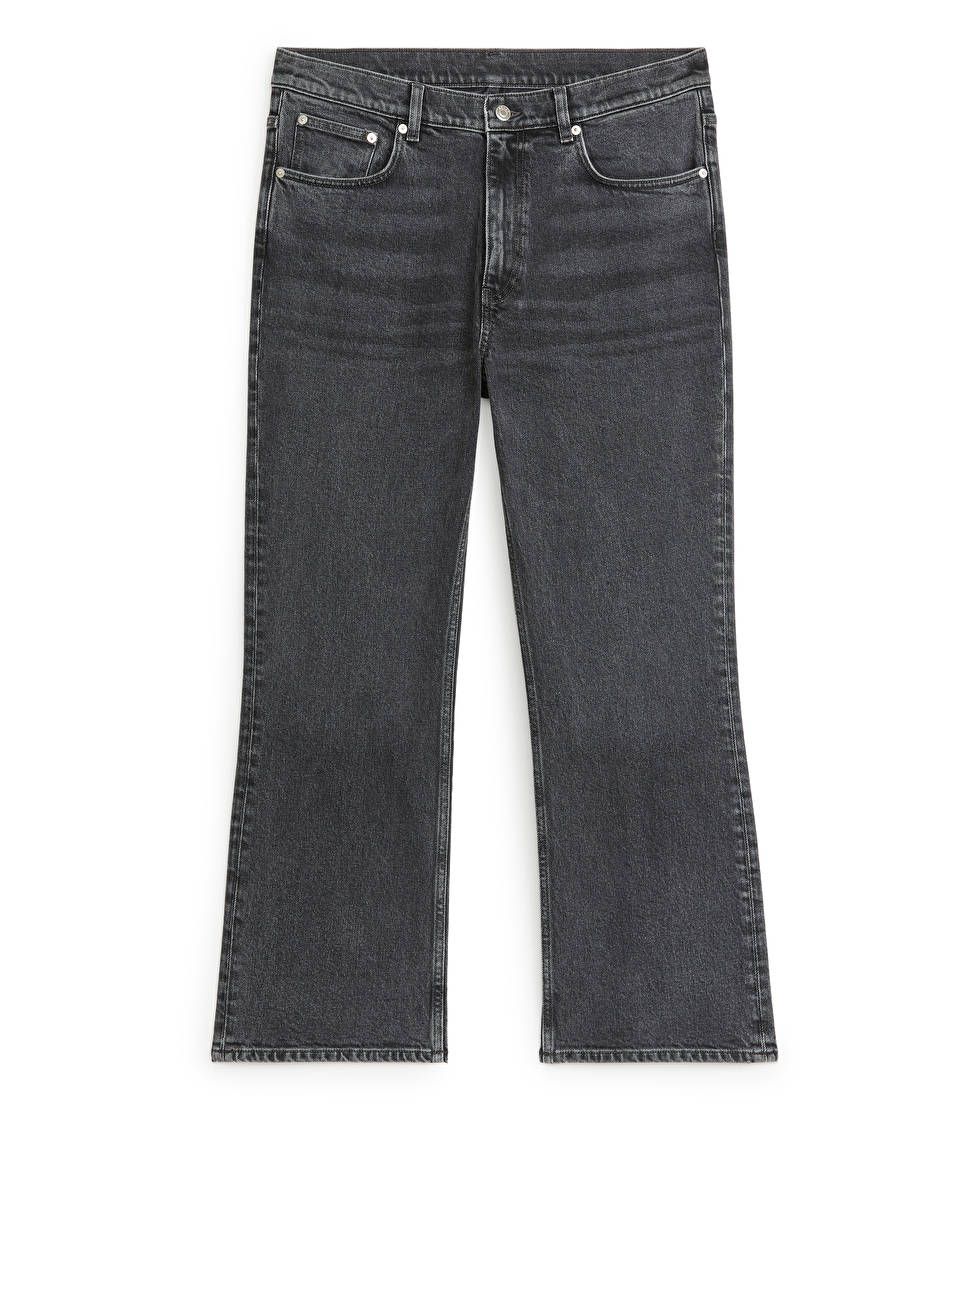 FERN CROPPED Flared Stretch Jeans | ARKET (US&UK)